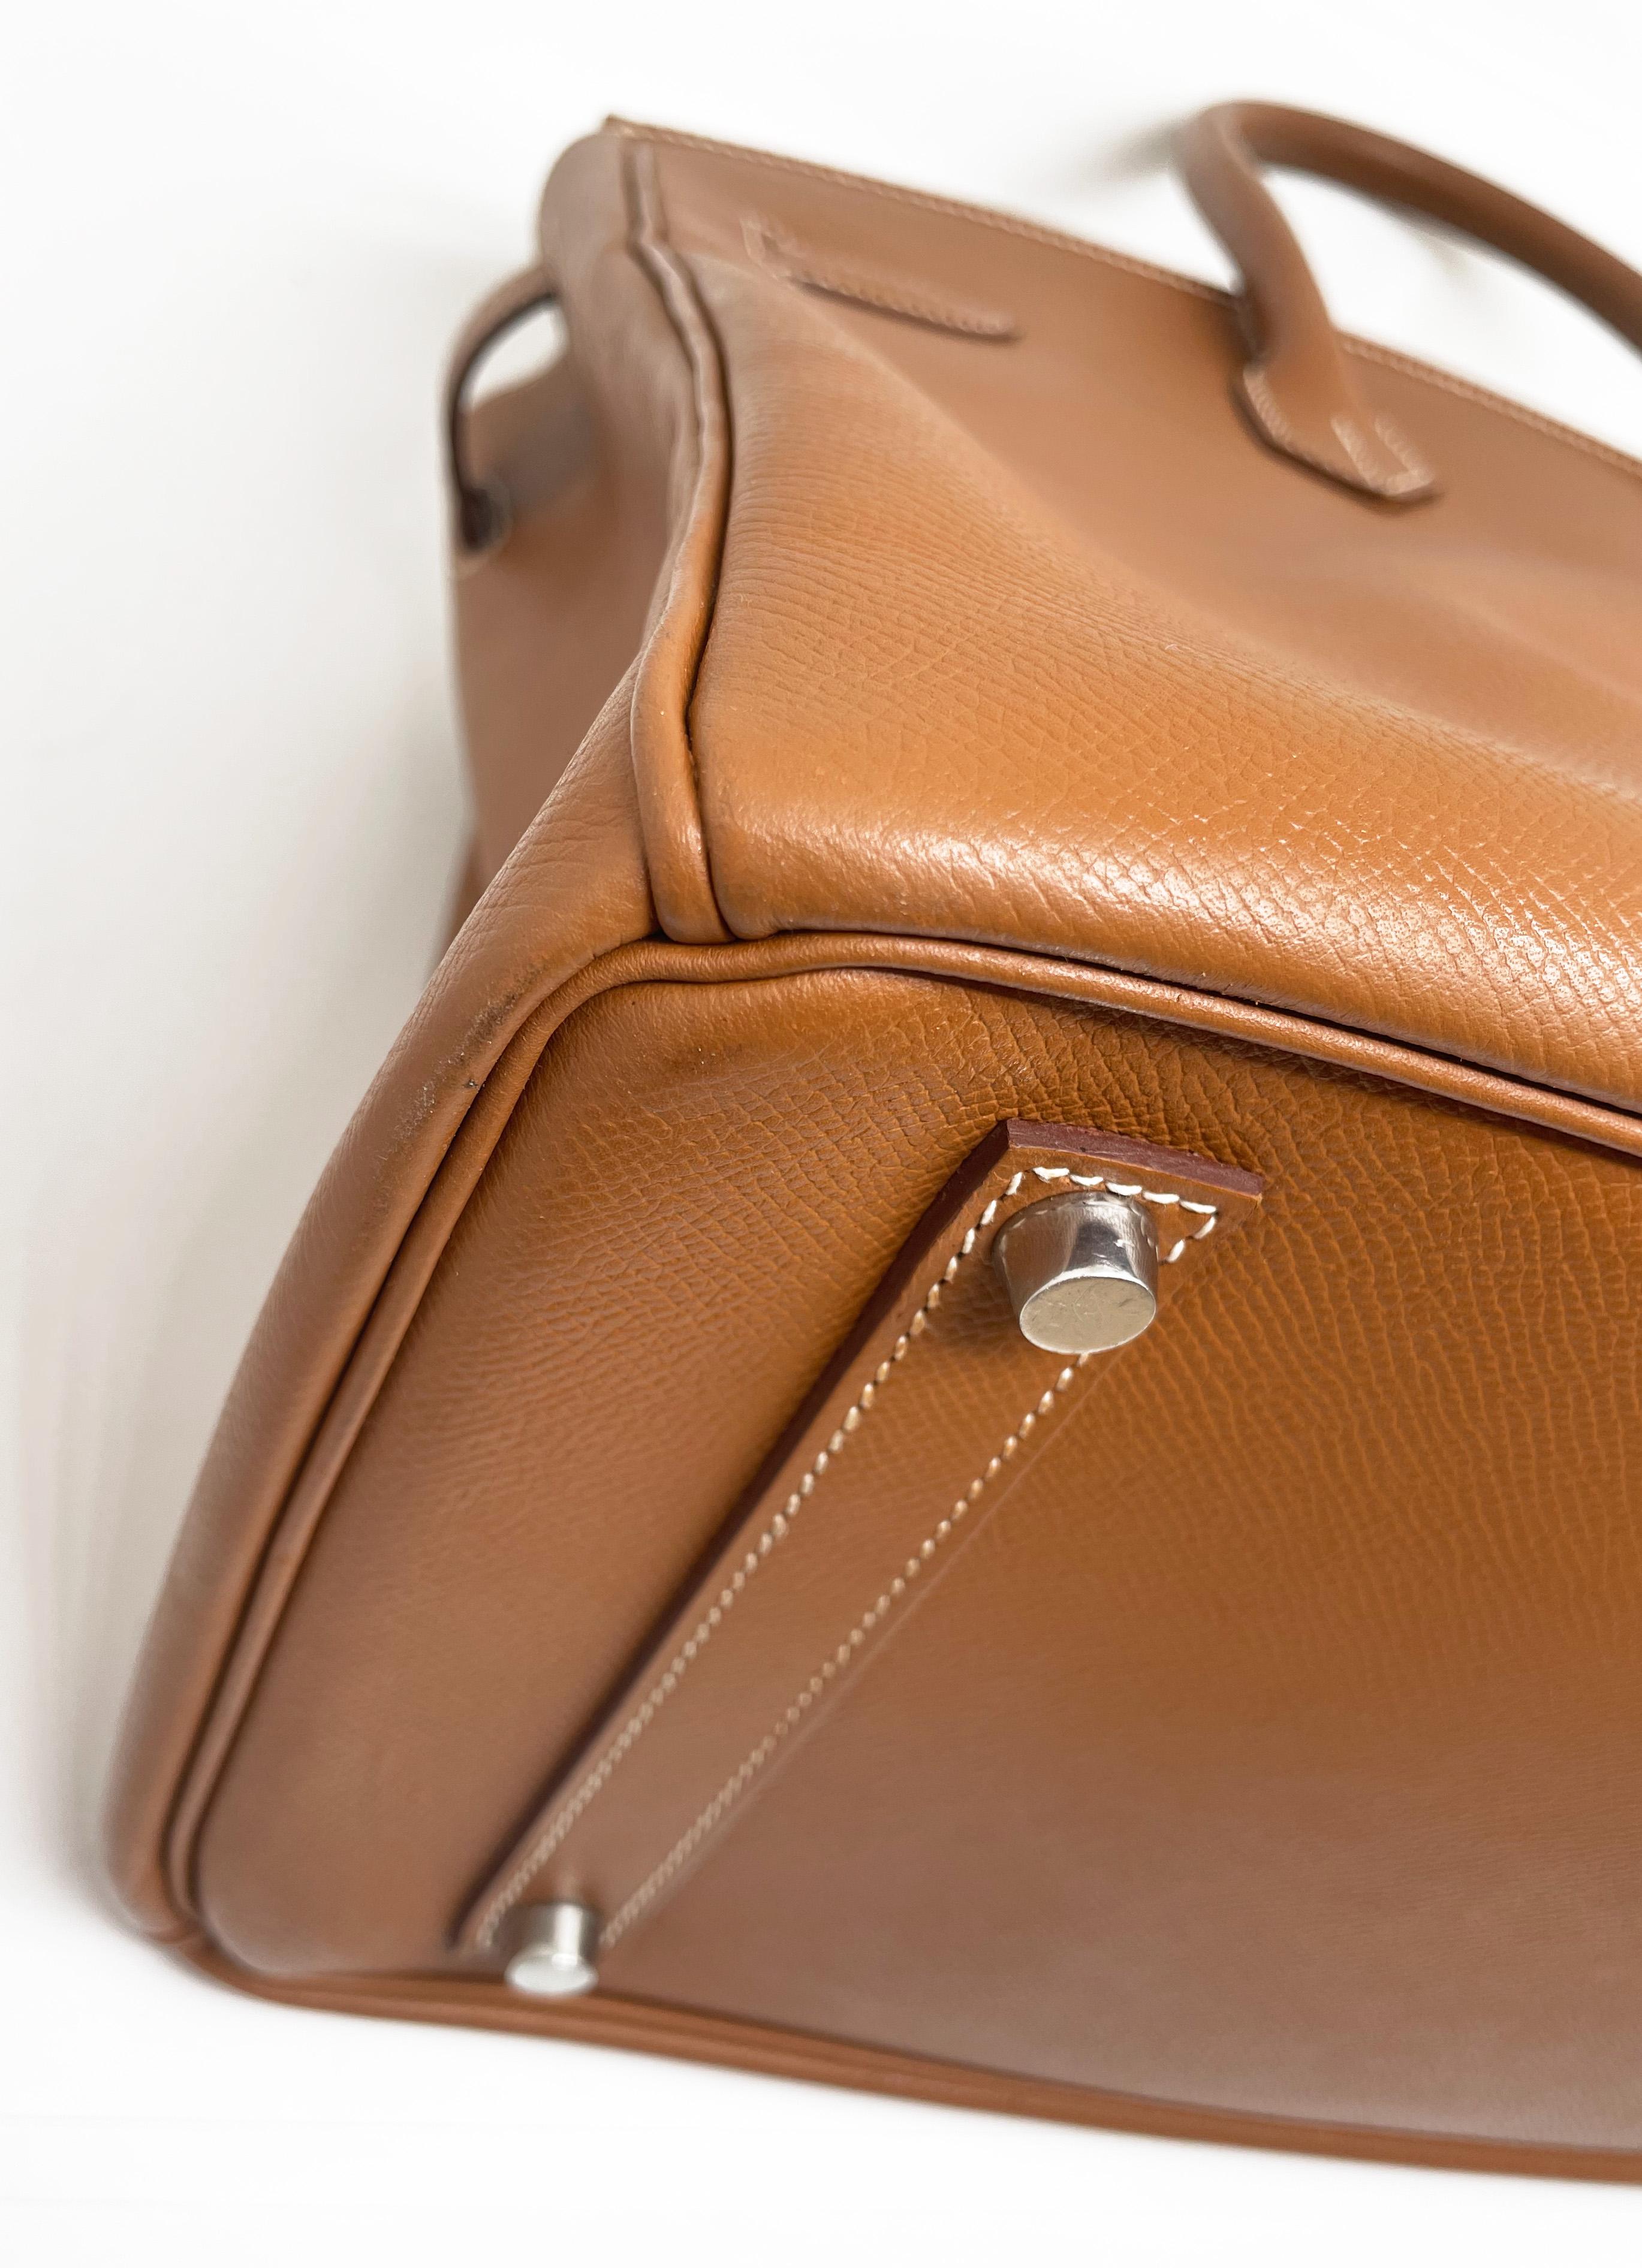 Hermès Birkin 35 Gold handbag in Espom leather and white stitching 6